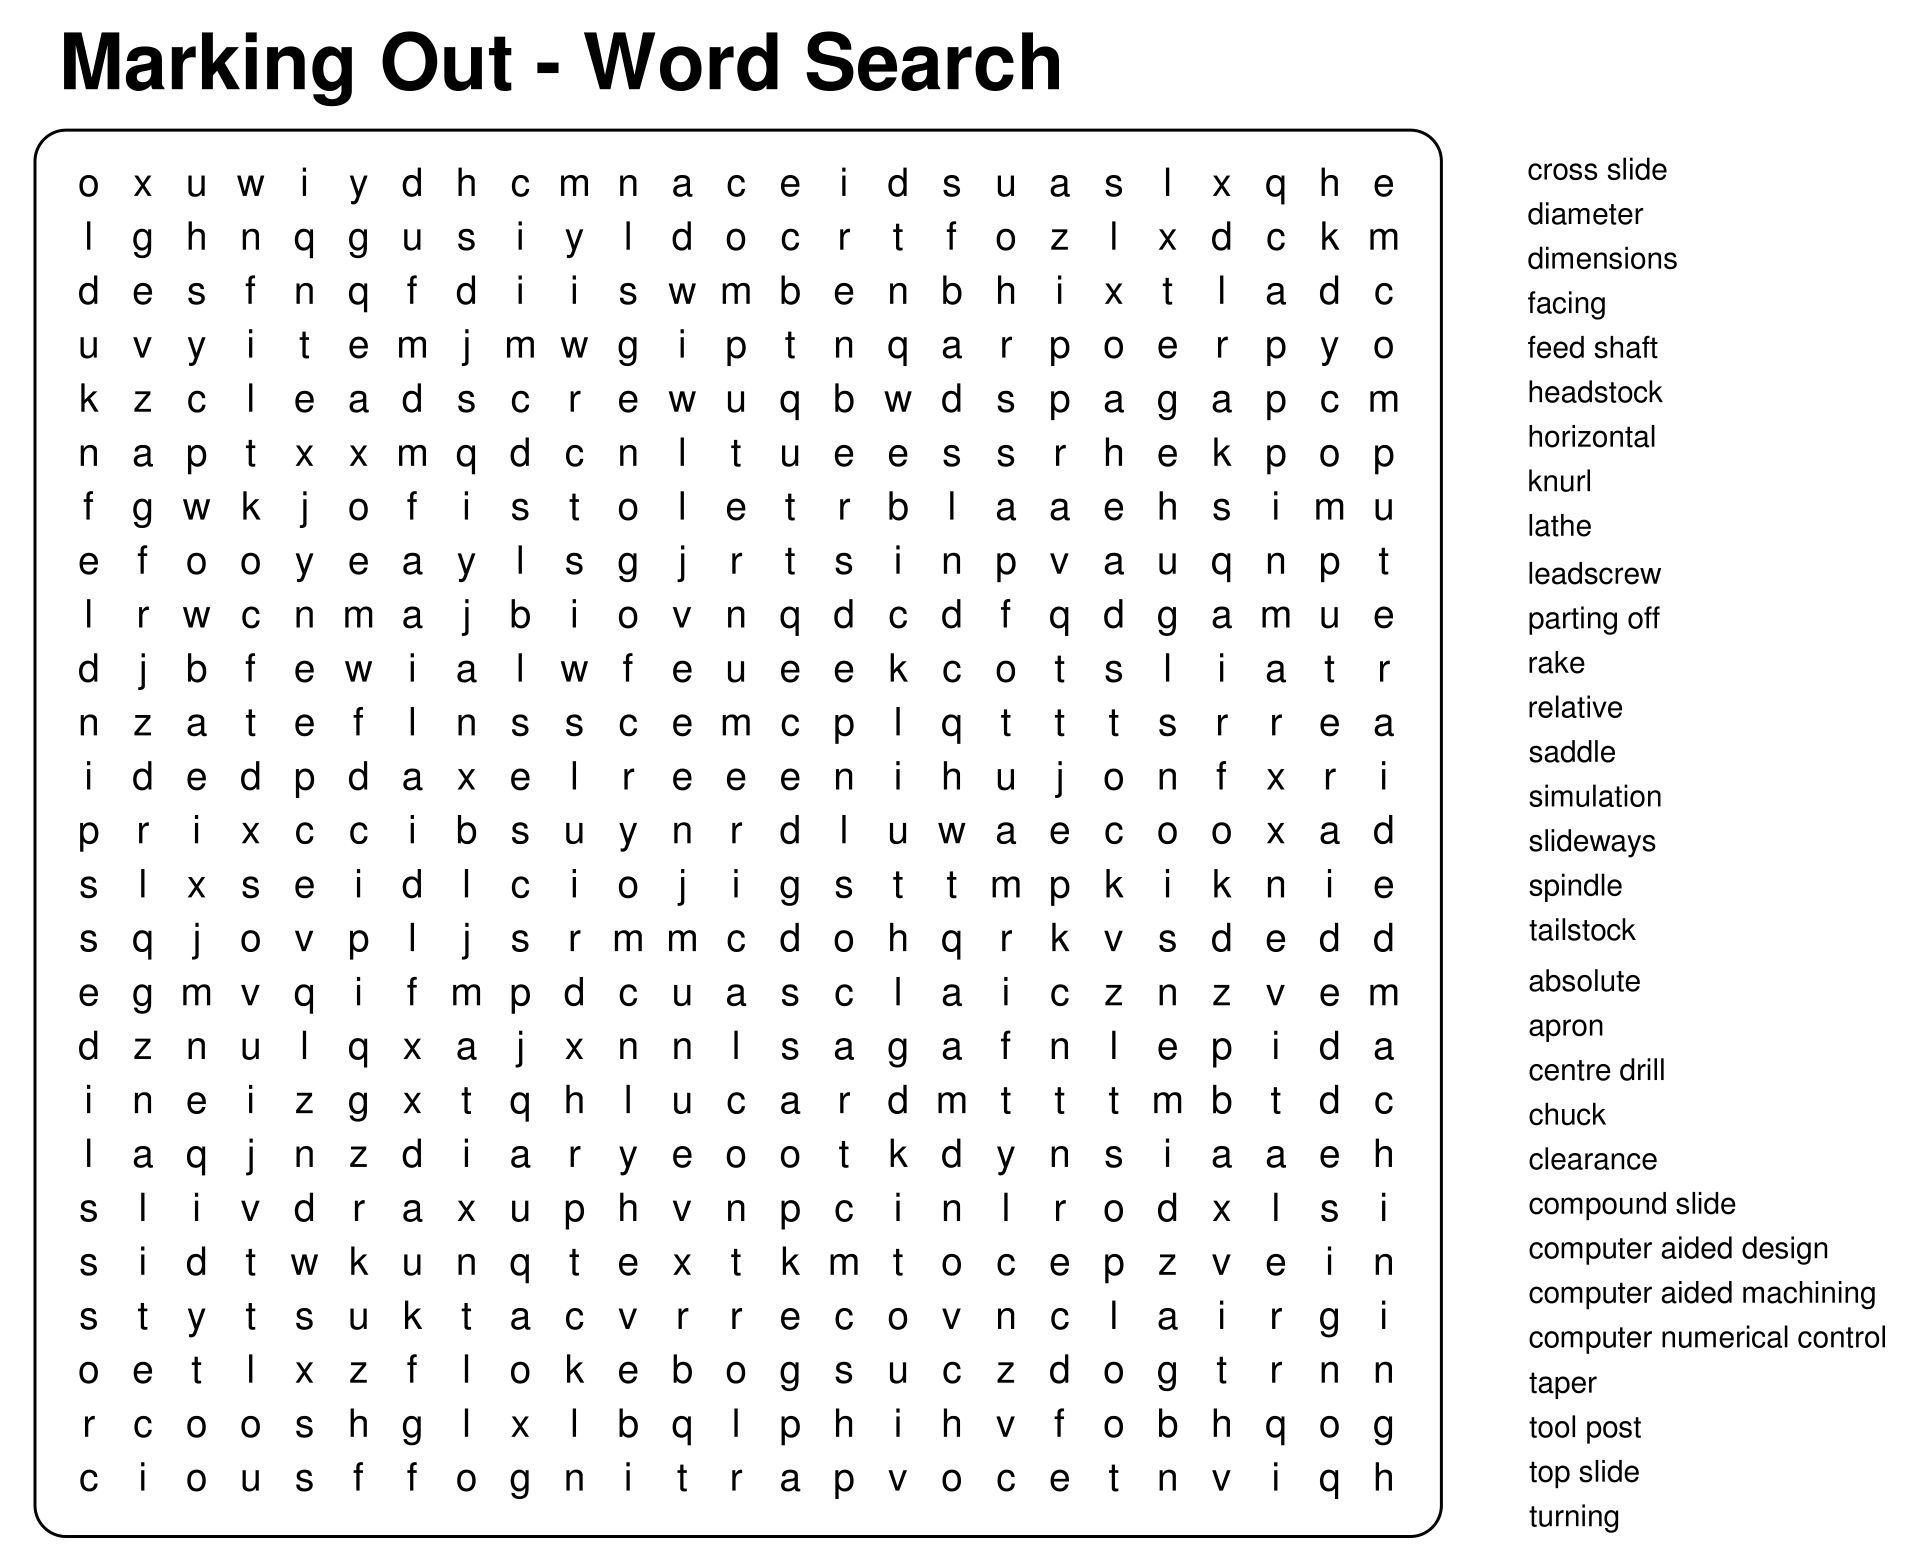 Printable 100 Word Word Searches Printable Jd 